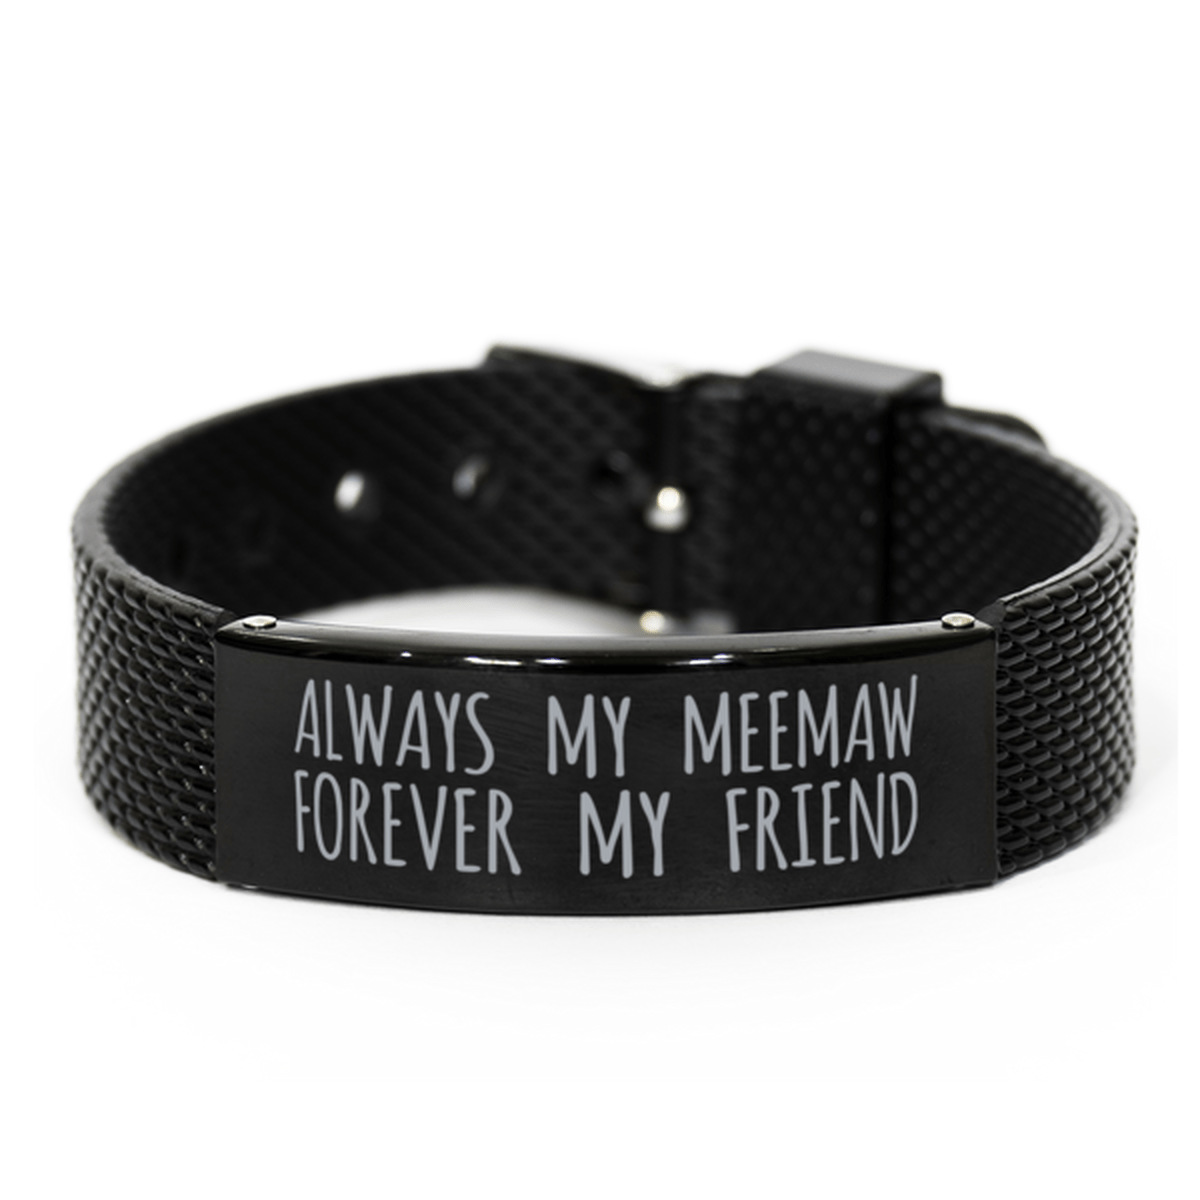 Inspirational Meemaw Black Shark Mesh Bracelet, Always My Meemaw Forever My Friend, Best Birthday Gifts for Family Friends